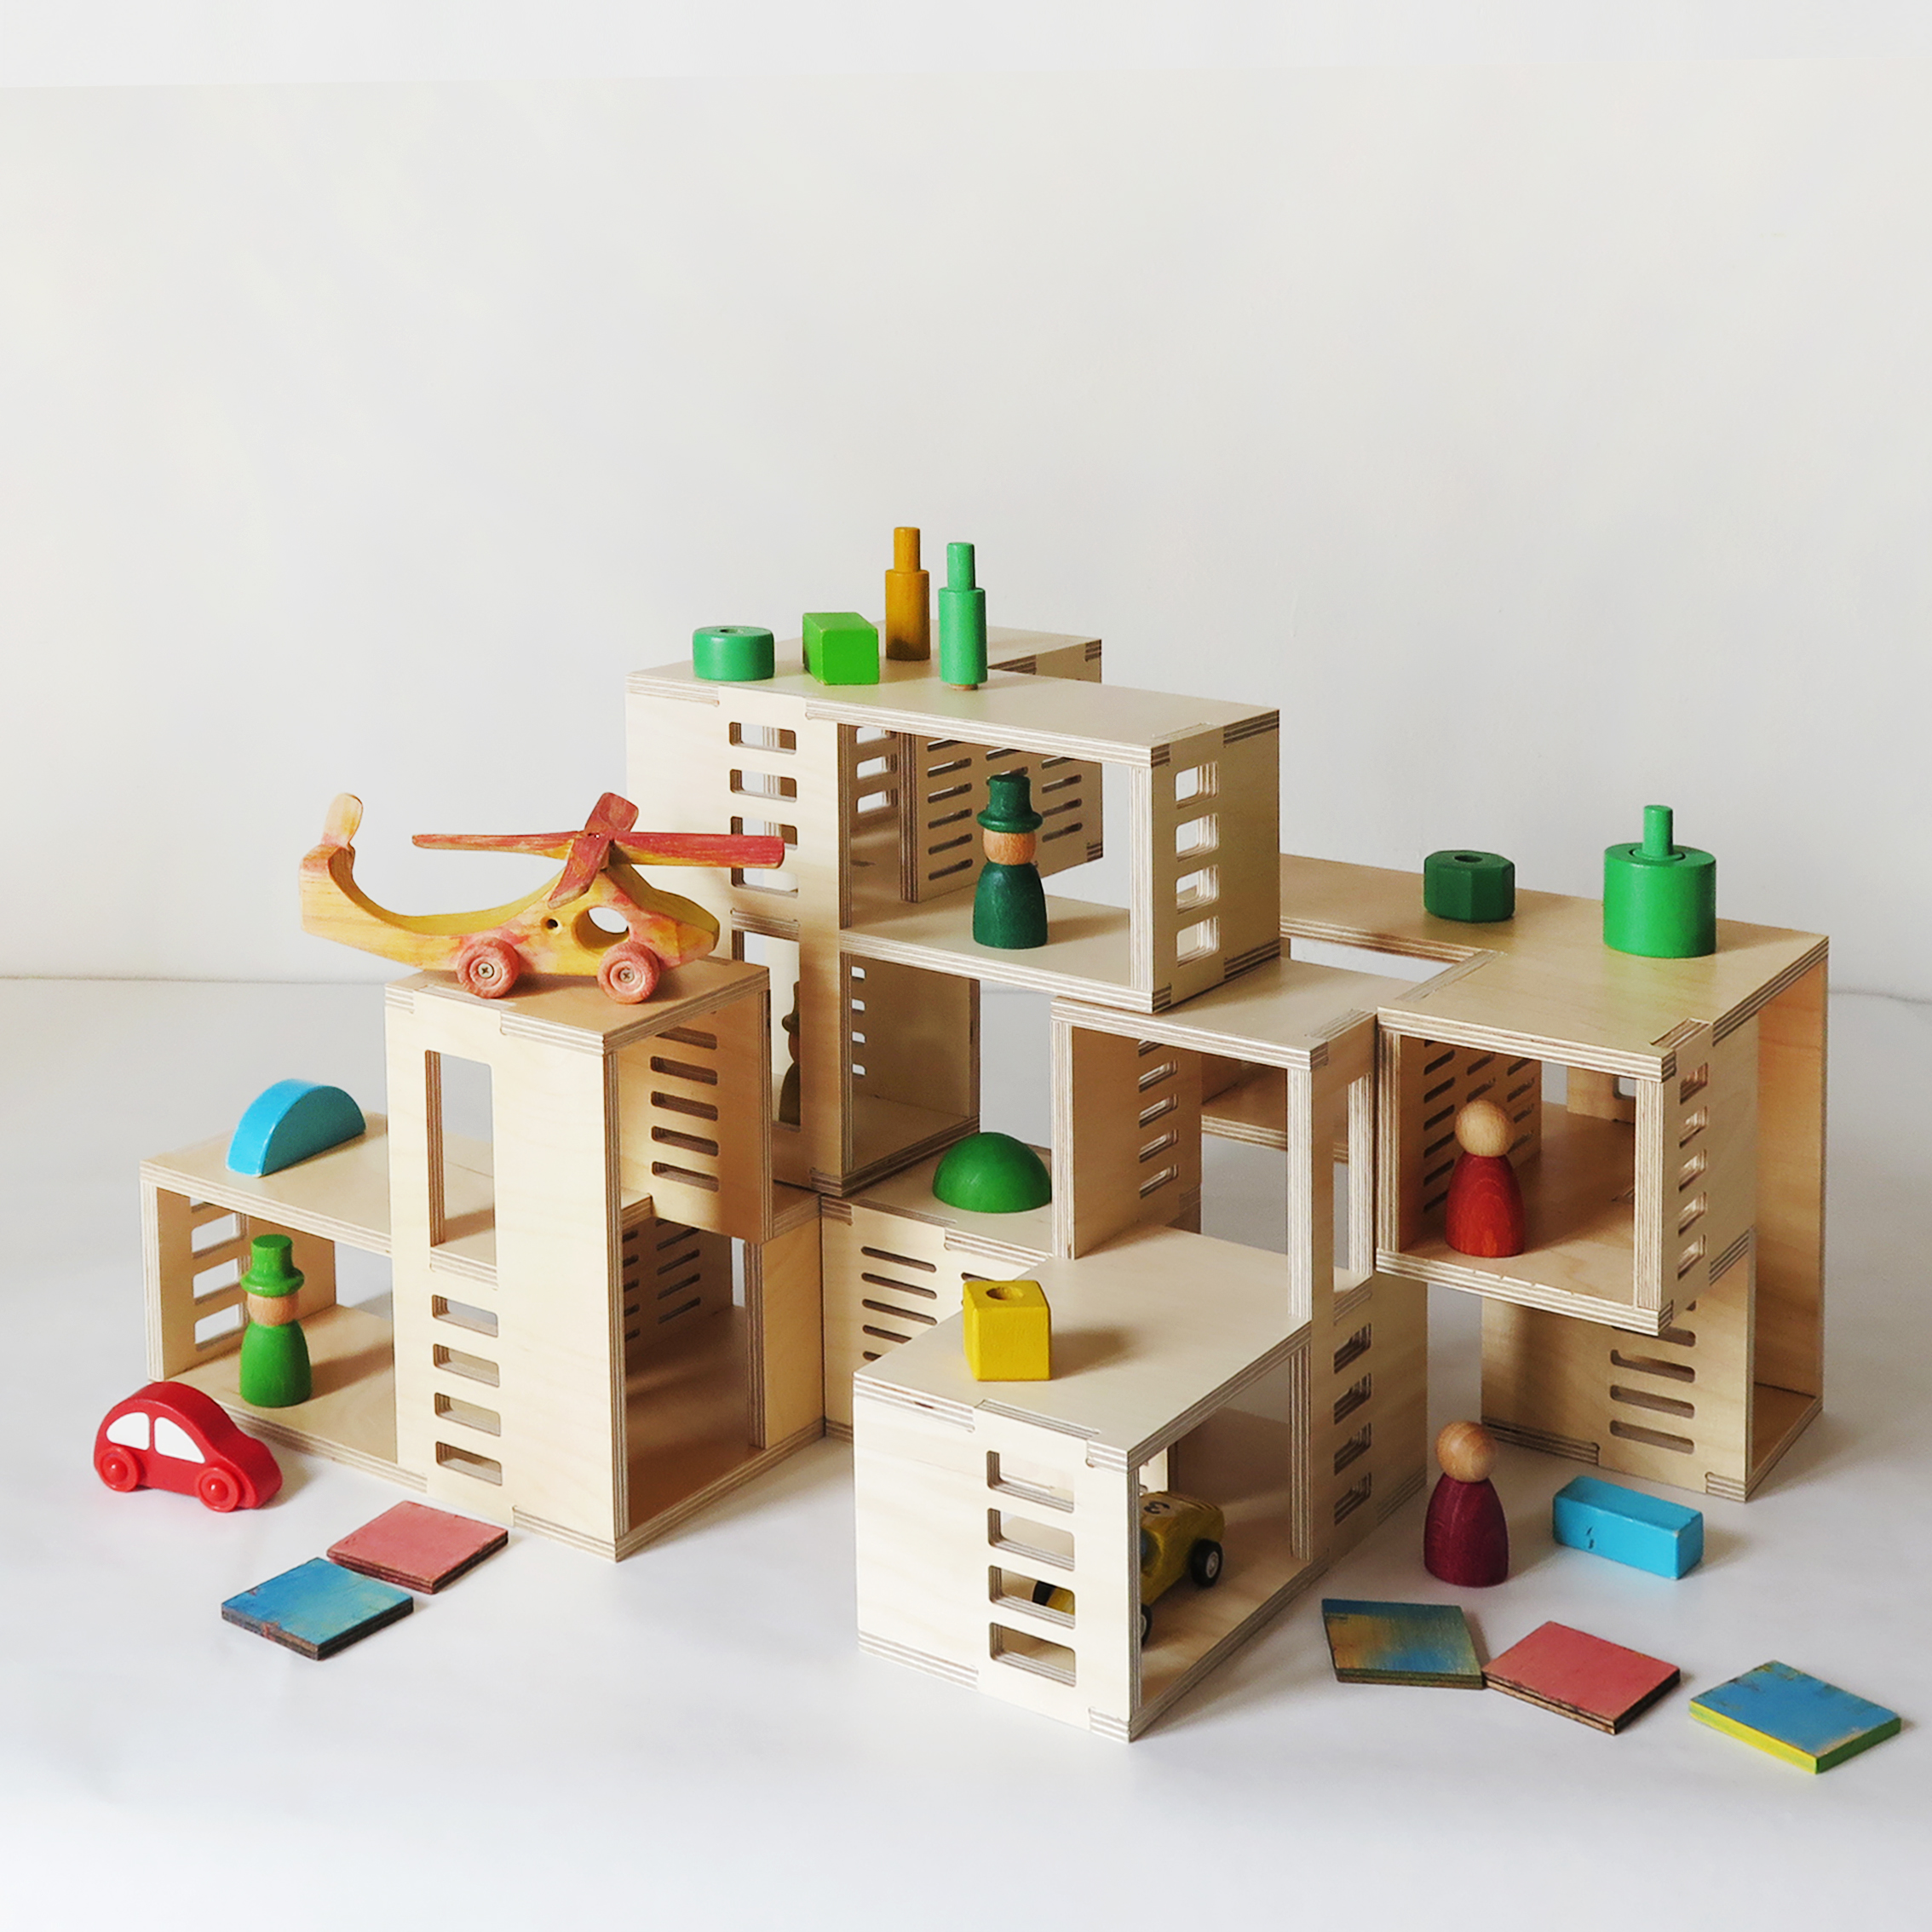 U-01 - modular toy building 